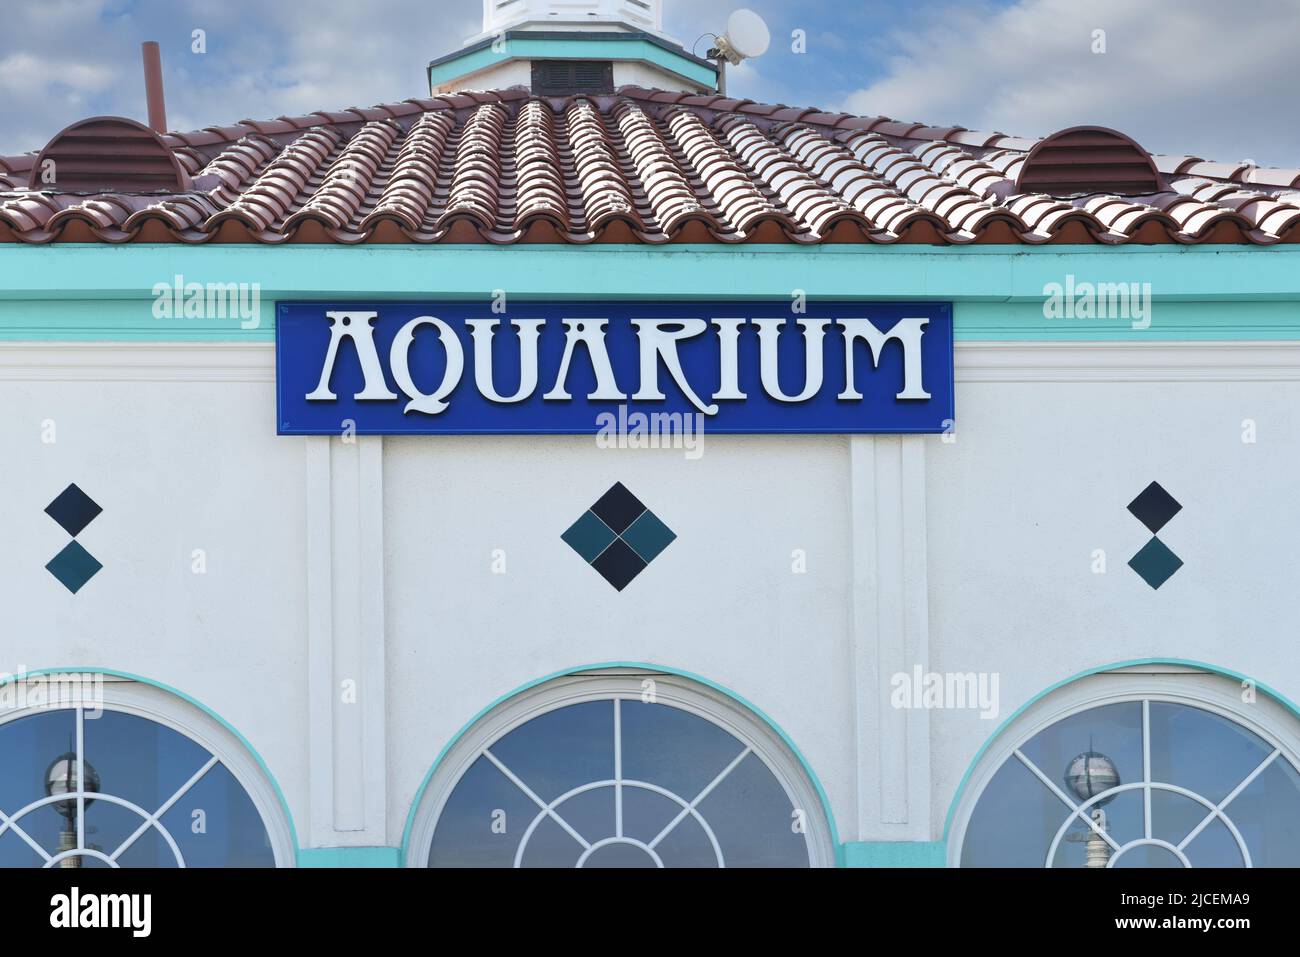 MANHATTAN BEACH, CALIFORNIA - 17 FEB 2020: Cartello sul Roundhouse Aquarium Teaching Center sul molo di Manhattan Beach. Foto Stock